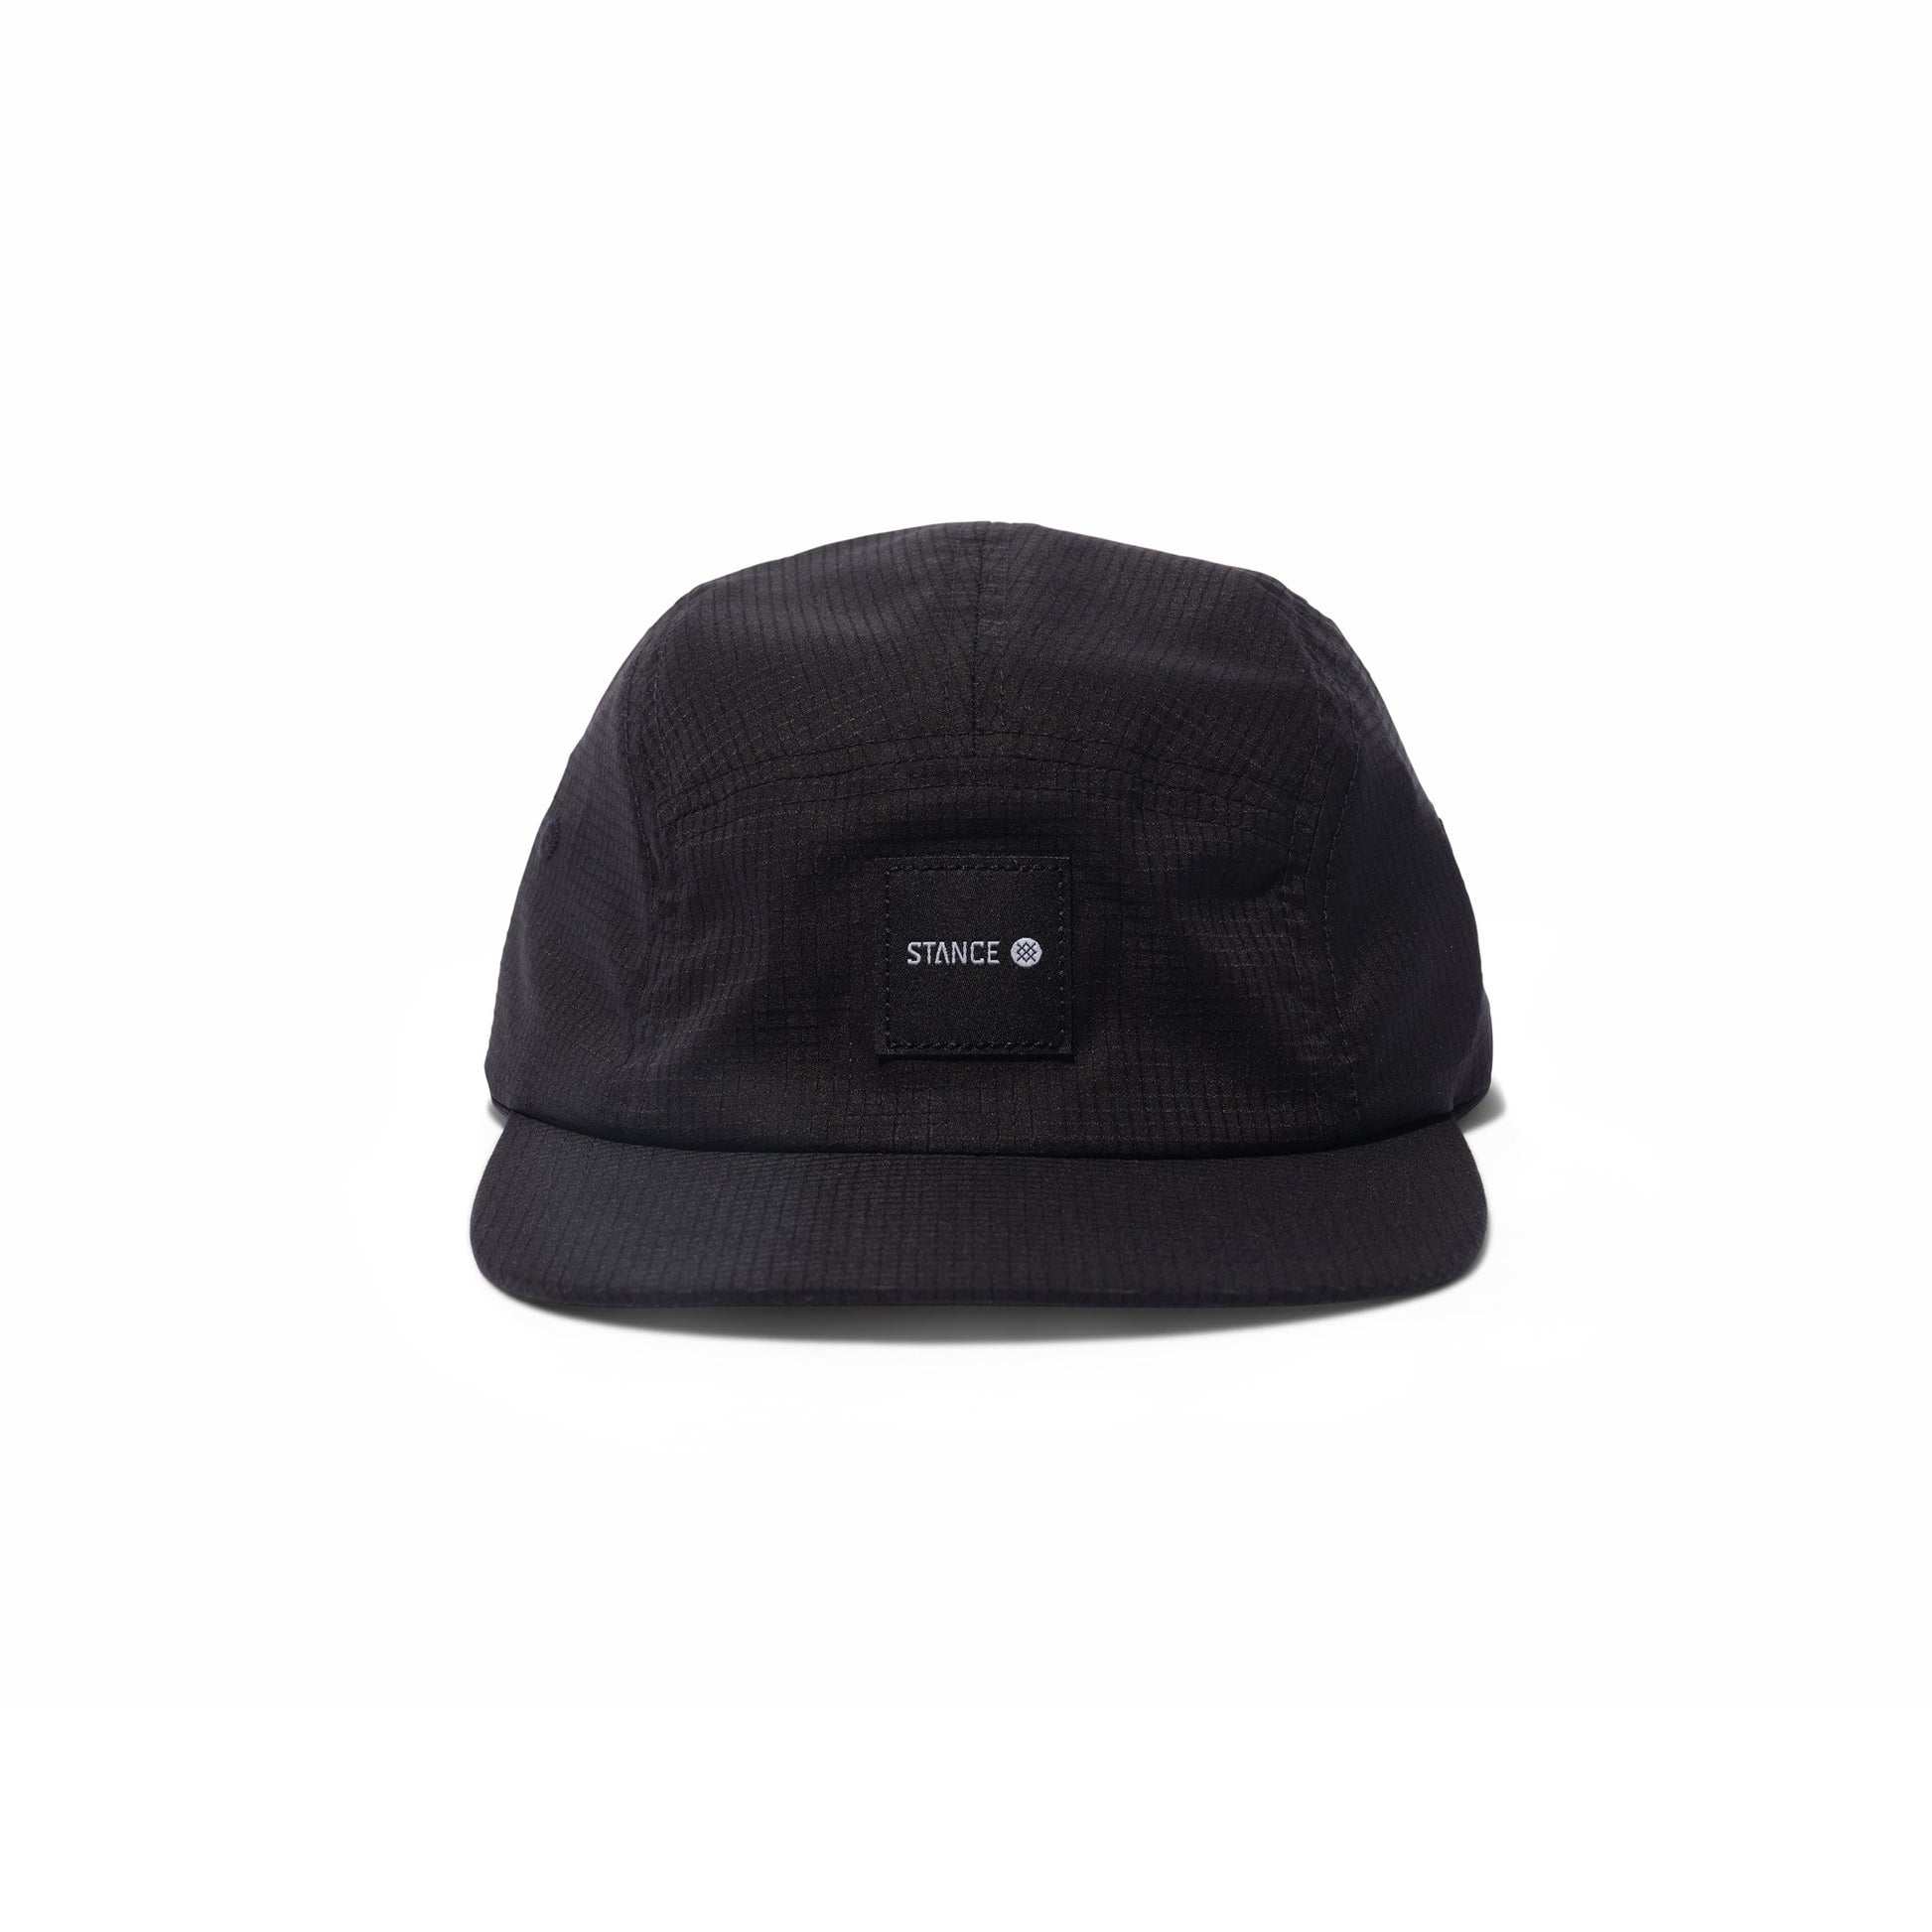 Stance KINECTIC ADJUSTABLE CAP Black